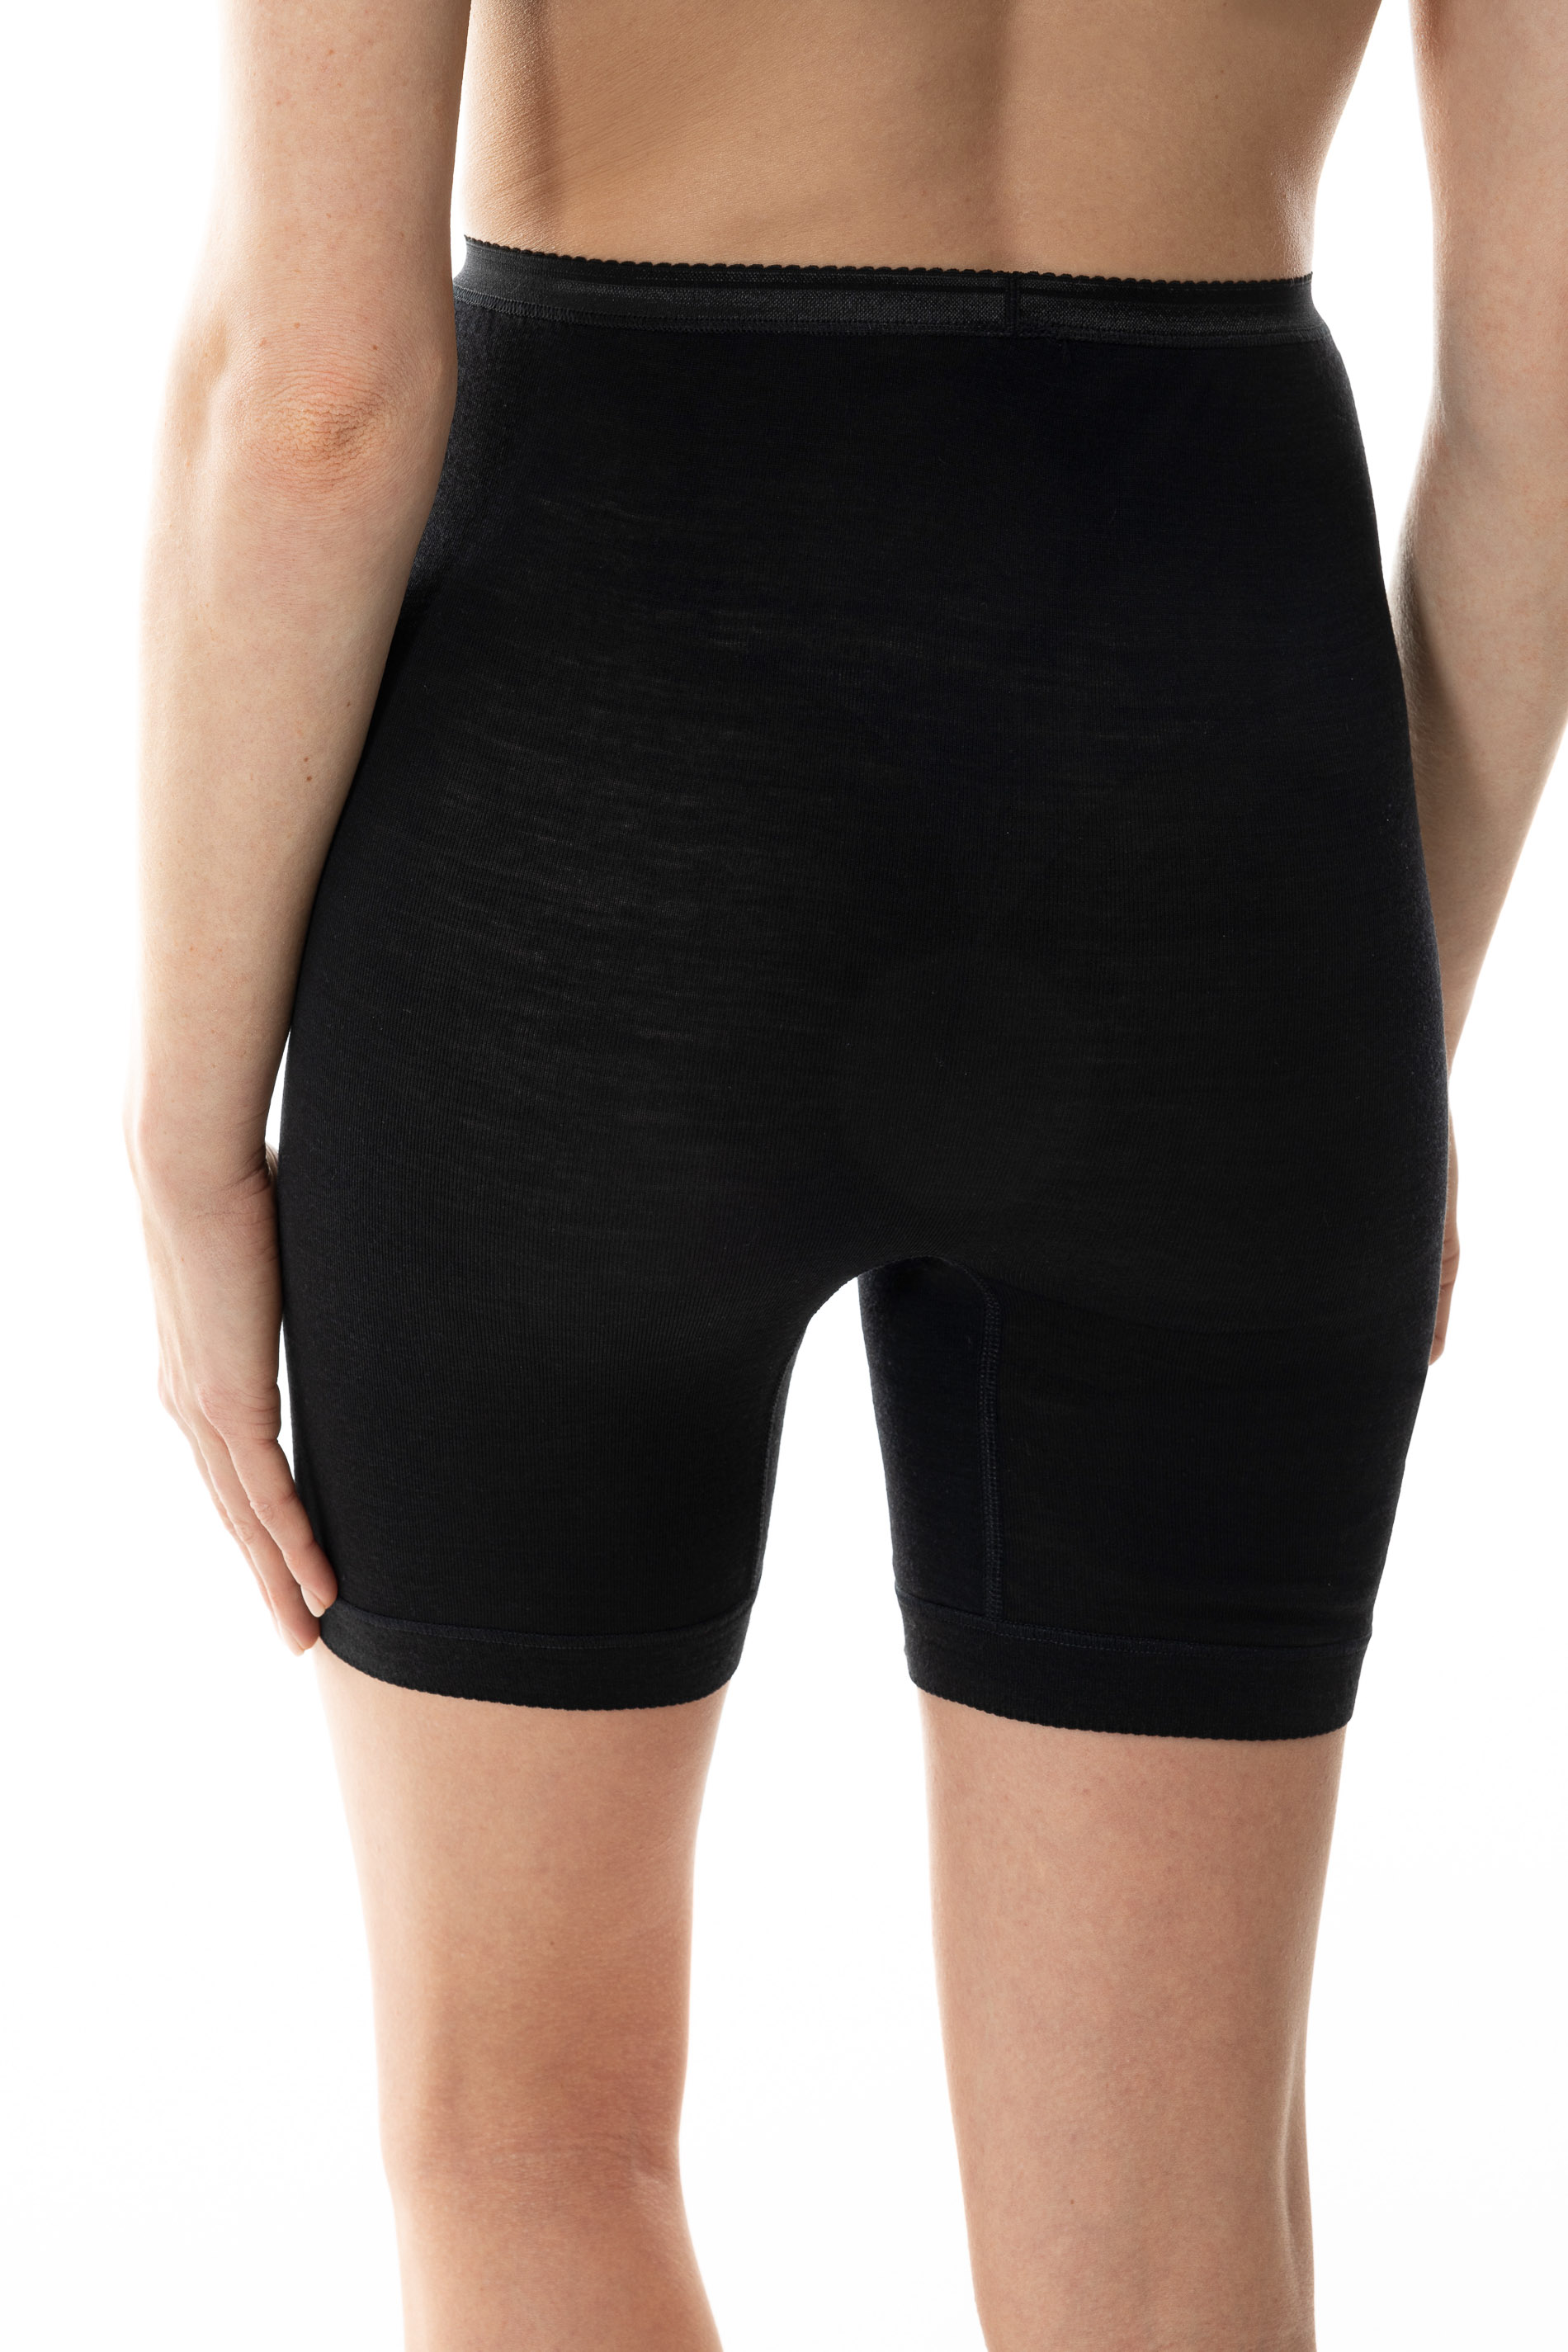 Panty Black Serie Exquisite Rear View | mey®